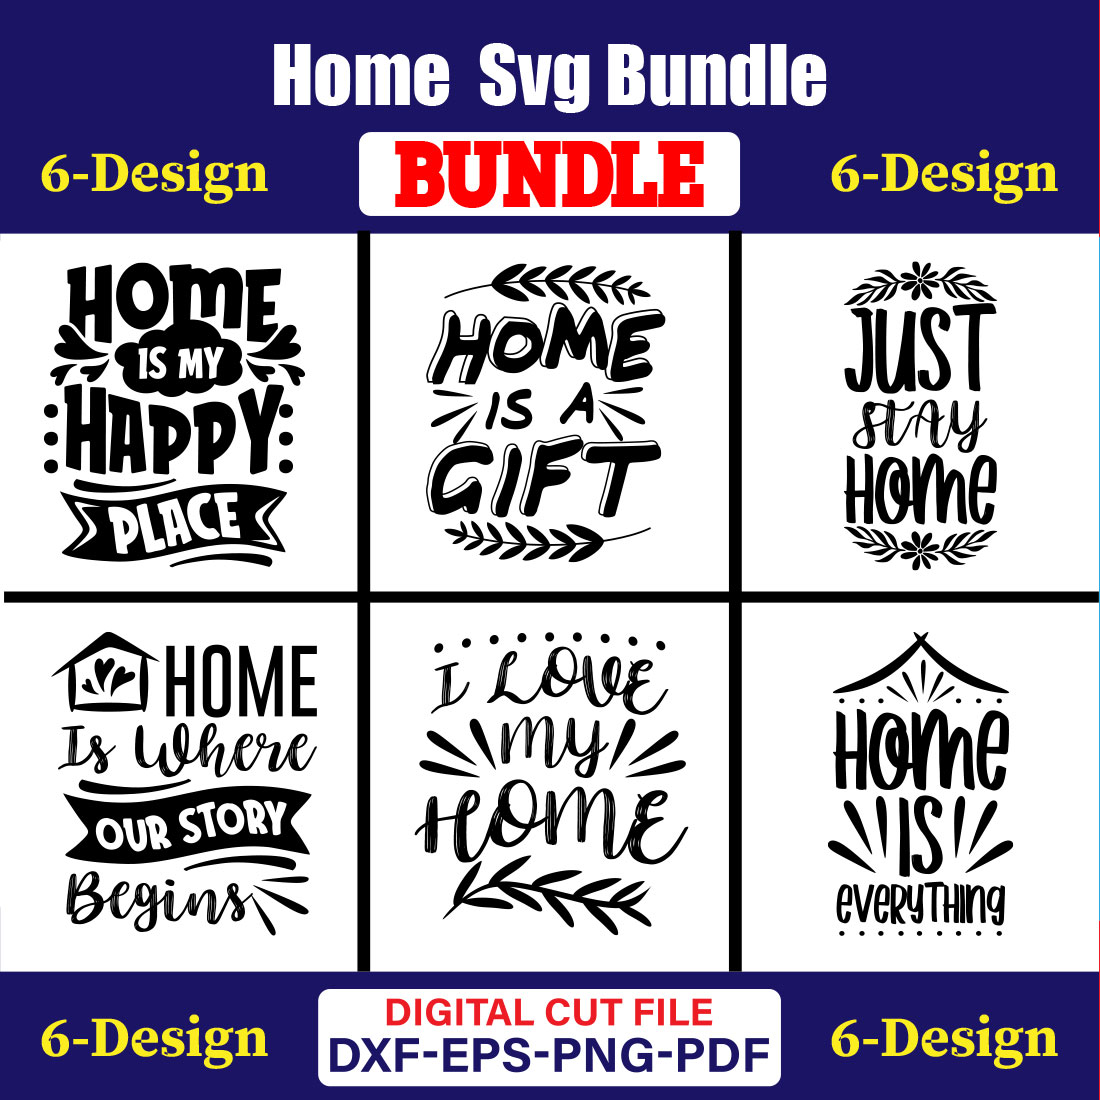 Home SVG T-shirt Design Bundle Vol-02 cover image.